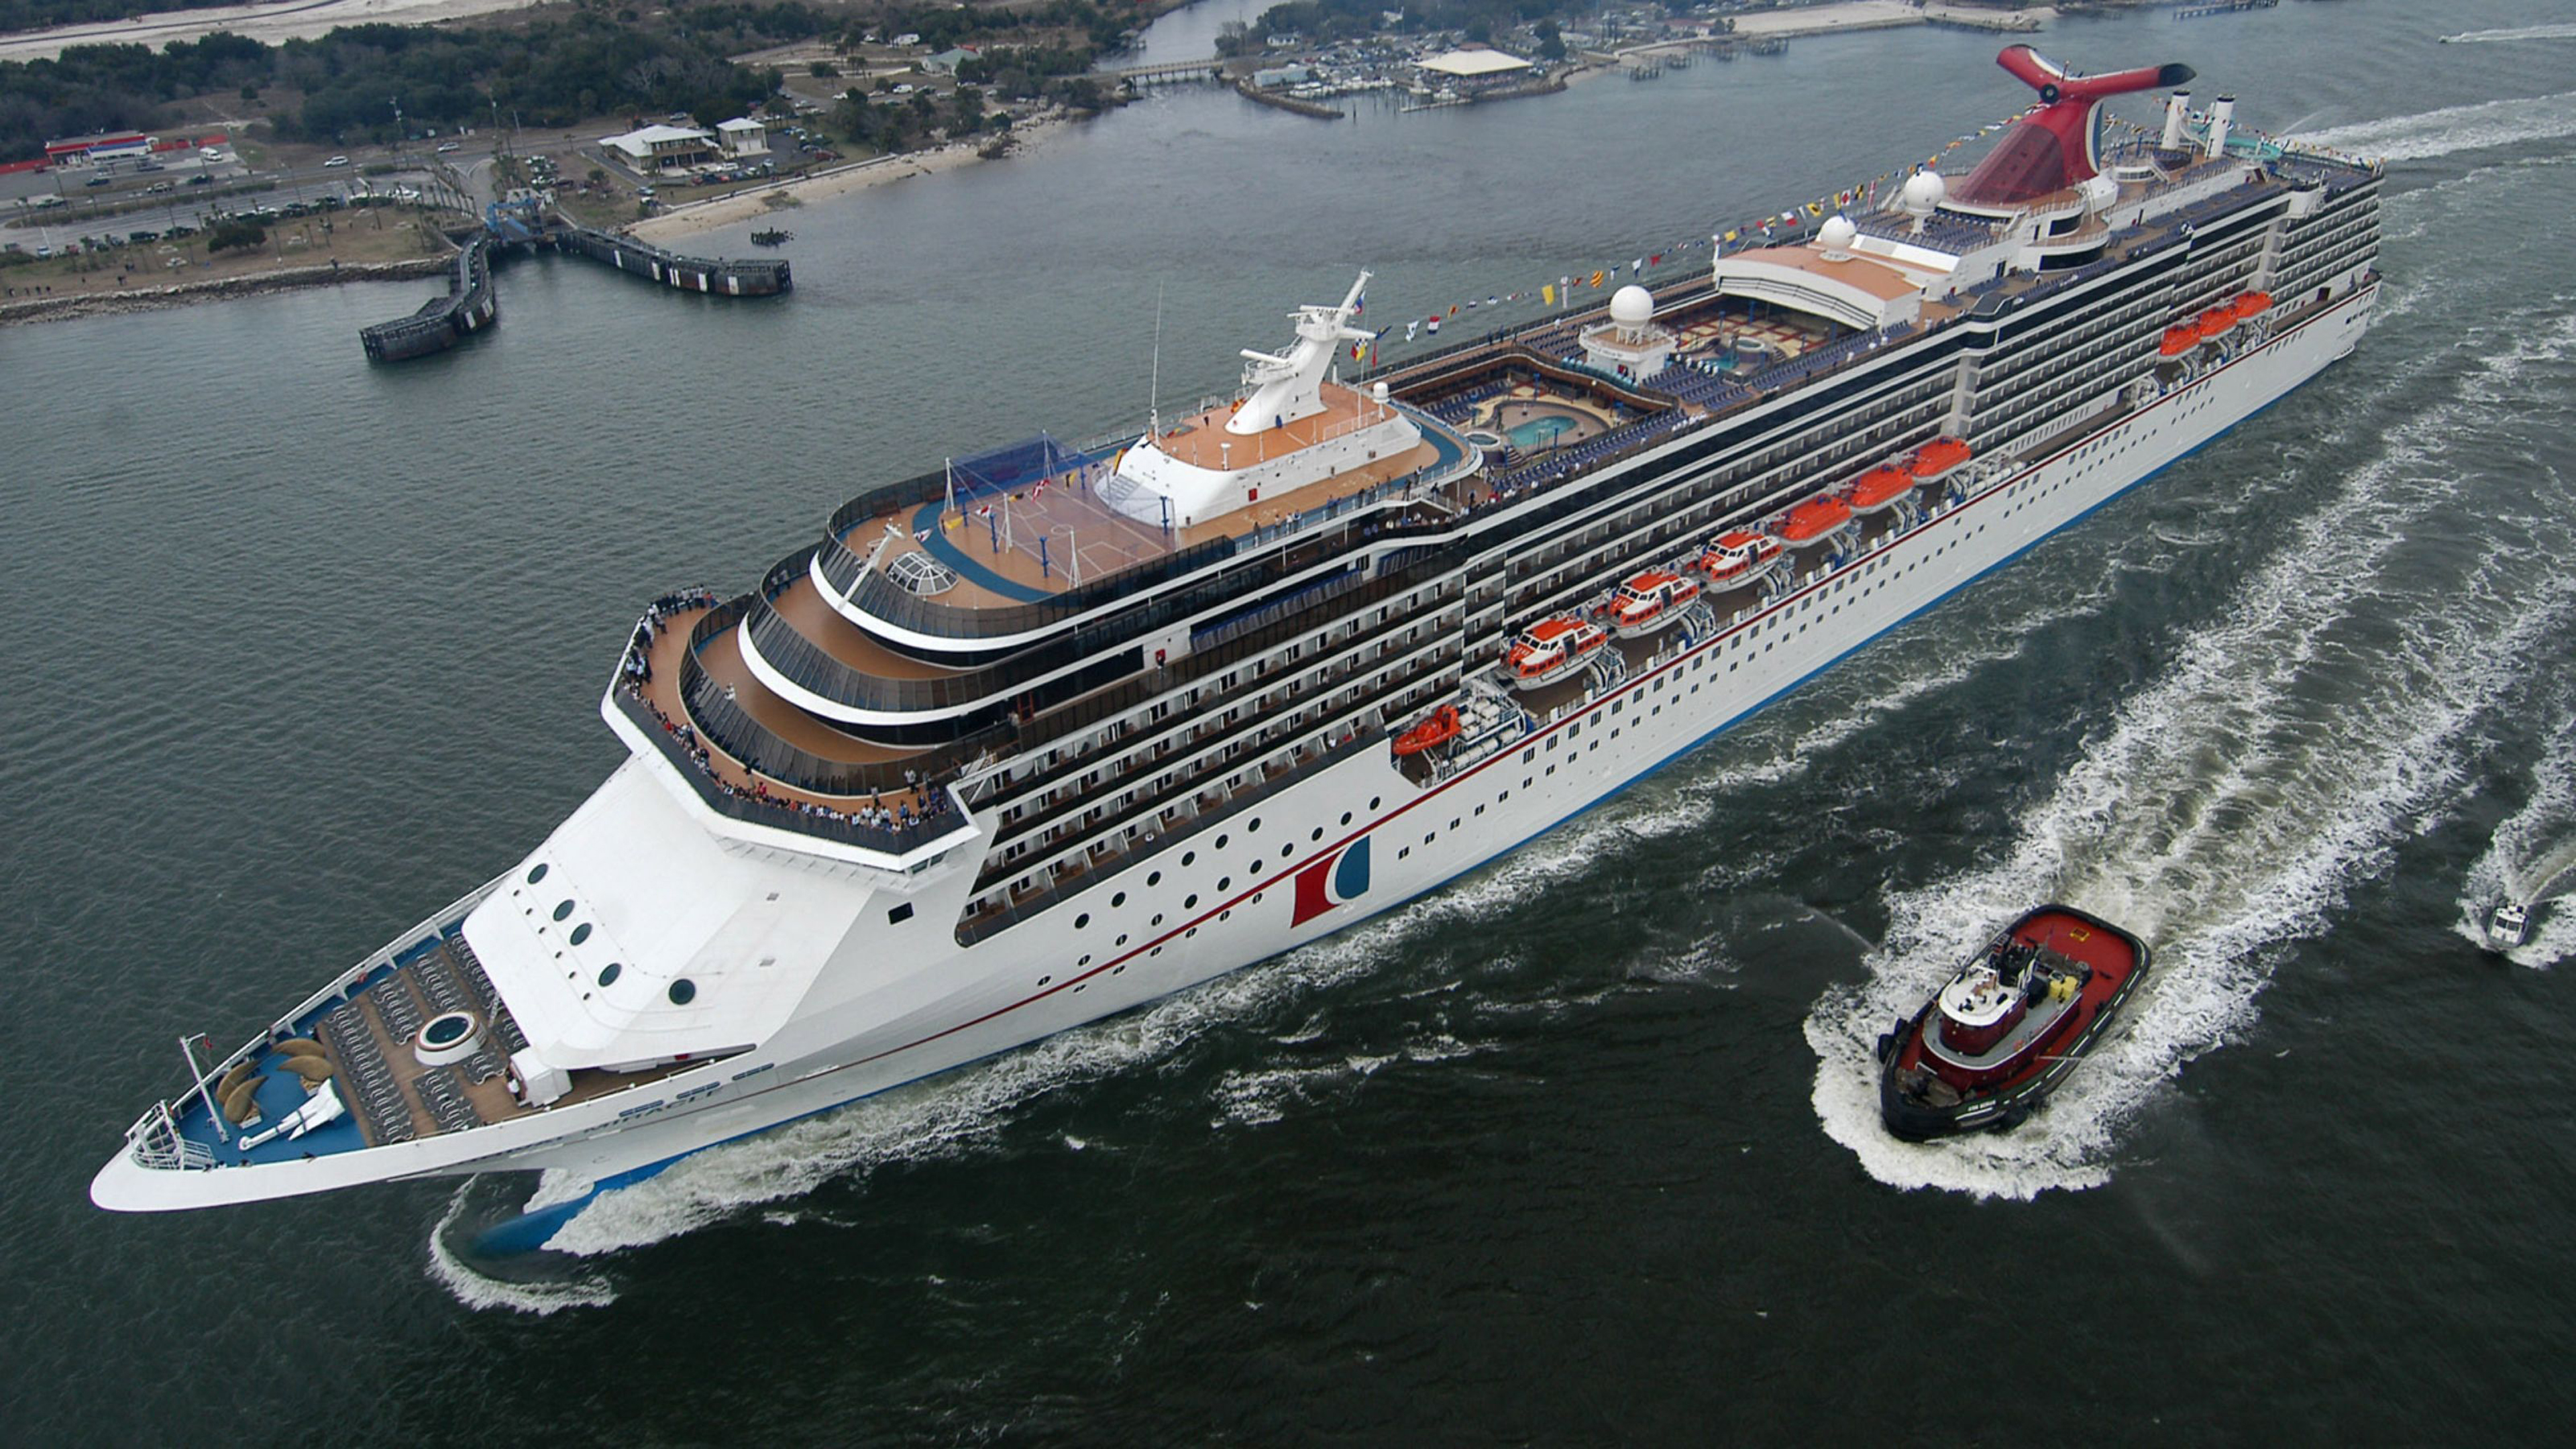 Aerial View Of A Long Cruise Ship K 2K Cruise Ship